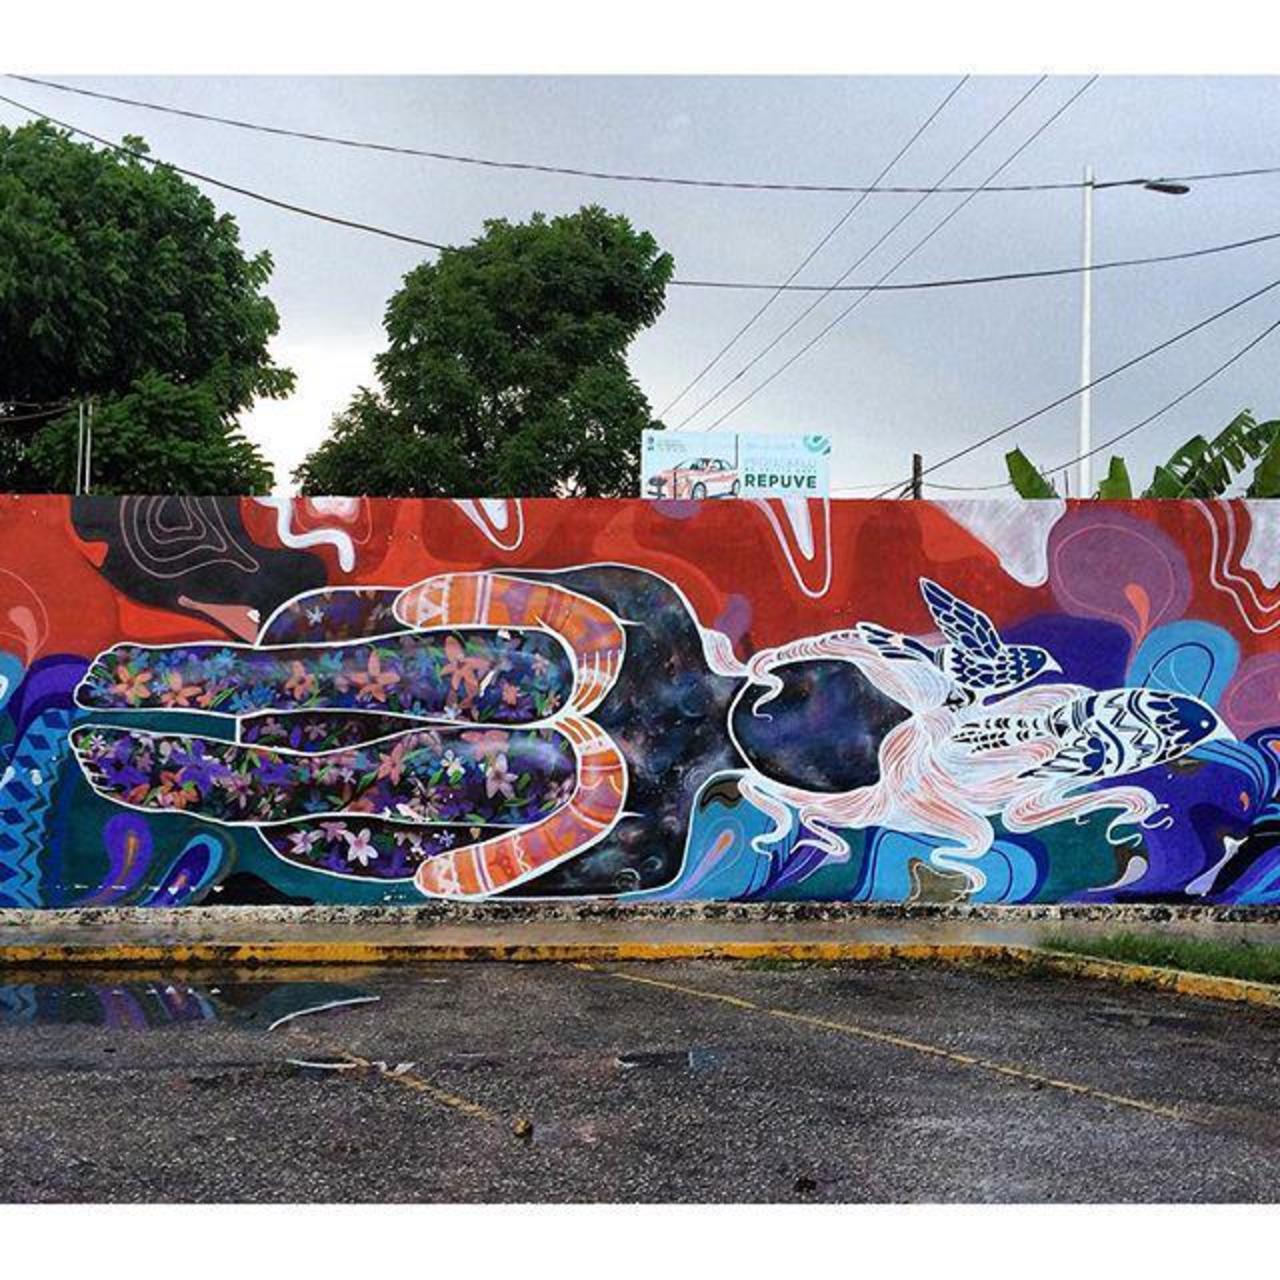 #streetart #arteurbano #urbanart #urban #art #mexico #mural #graffiti #streetartmexico #urbanwalls #wall #streetpho… http://t.co/lumvDCvwv4